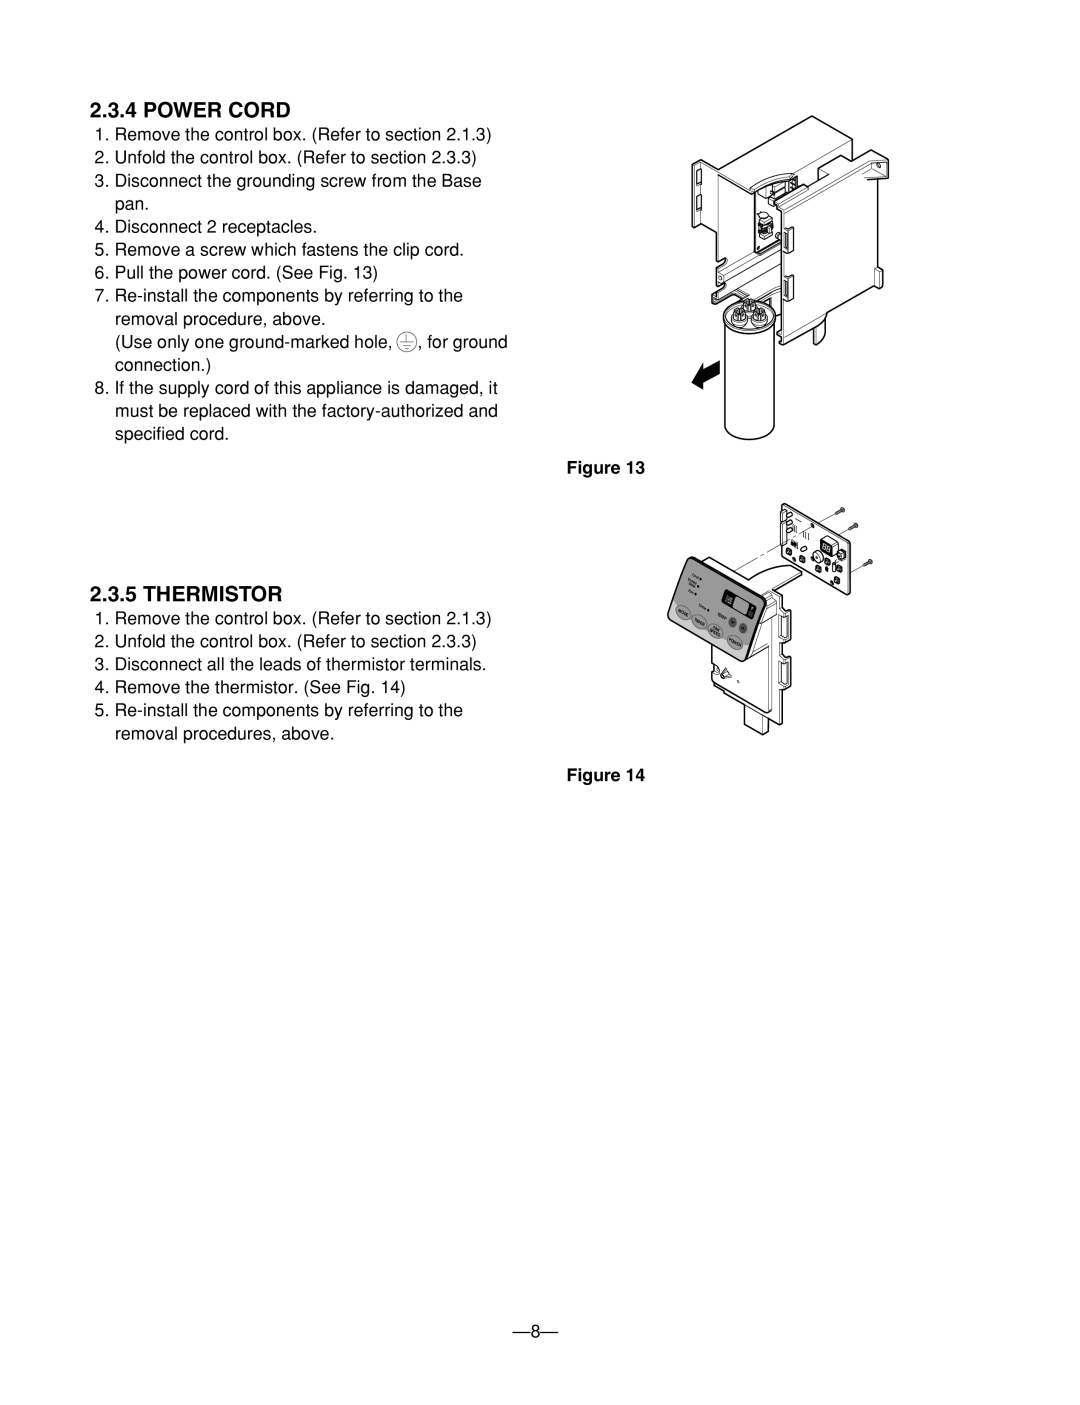 Heat Controller BG-103A service manual Power Cord, Thermistor 